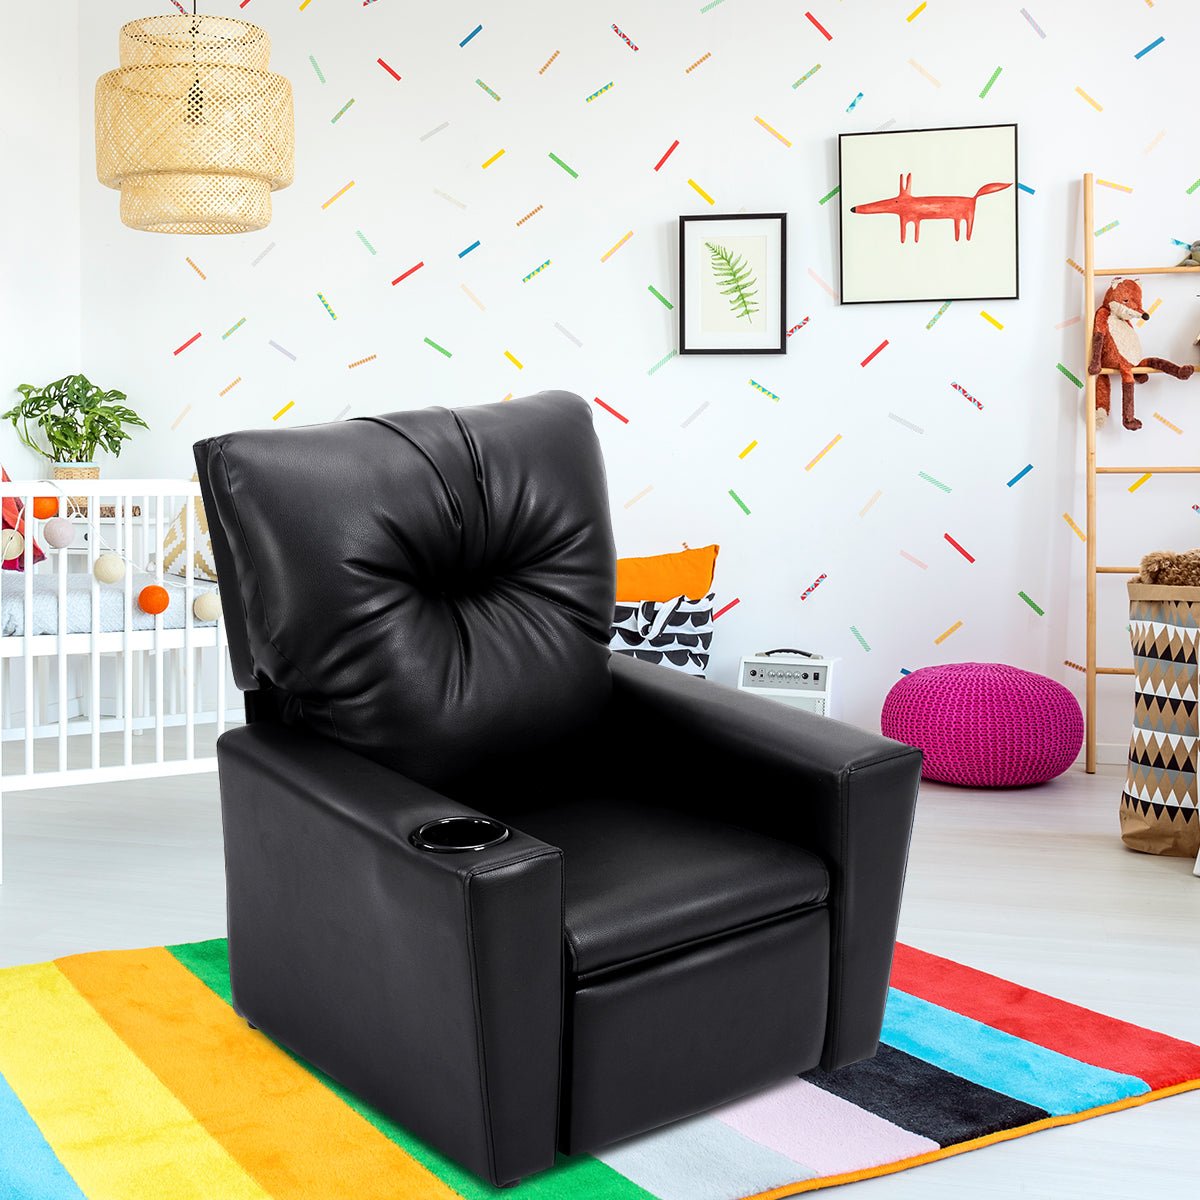 Black Kids Lounge Chair: Adjustable with Armrest and High Backrest